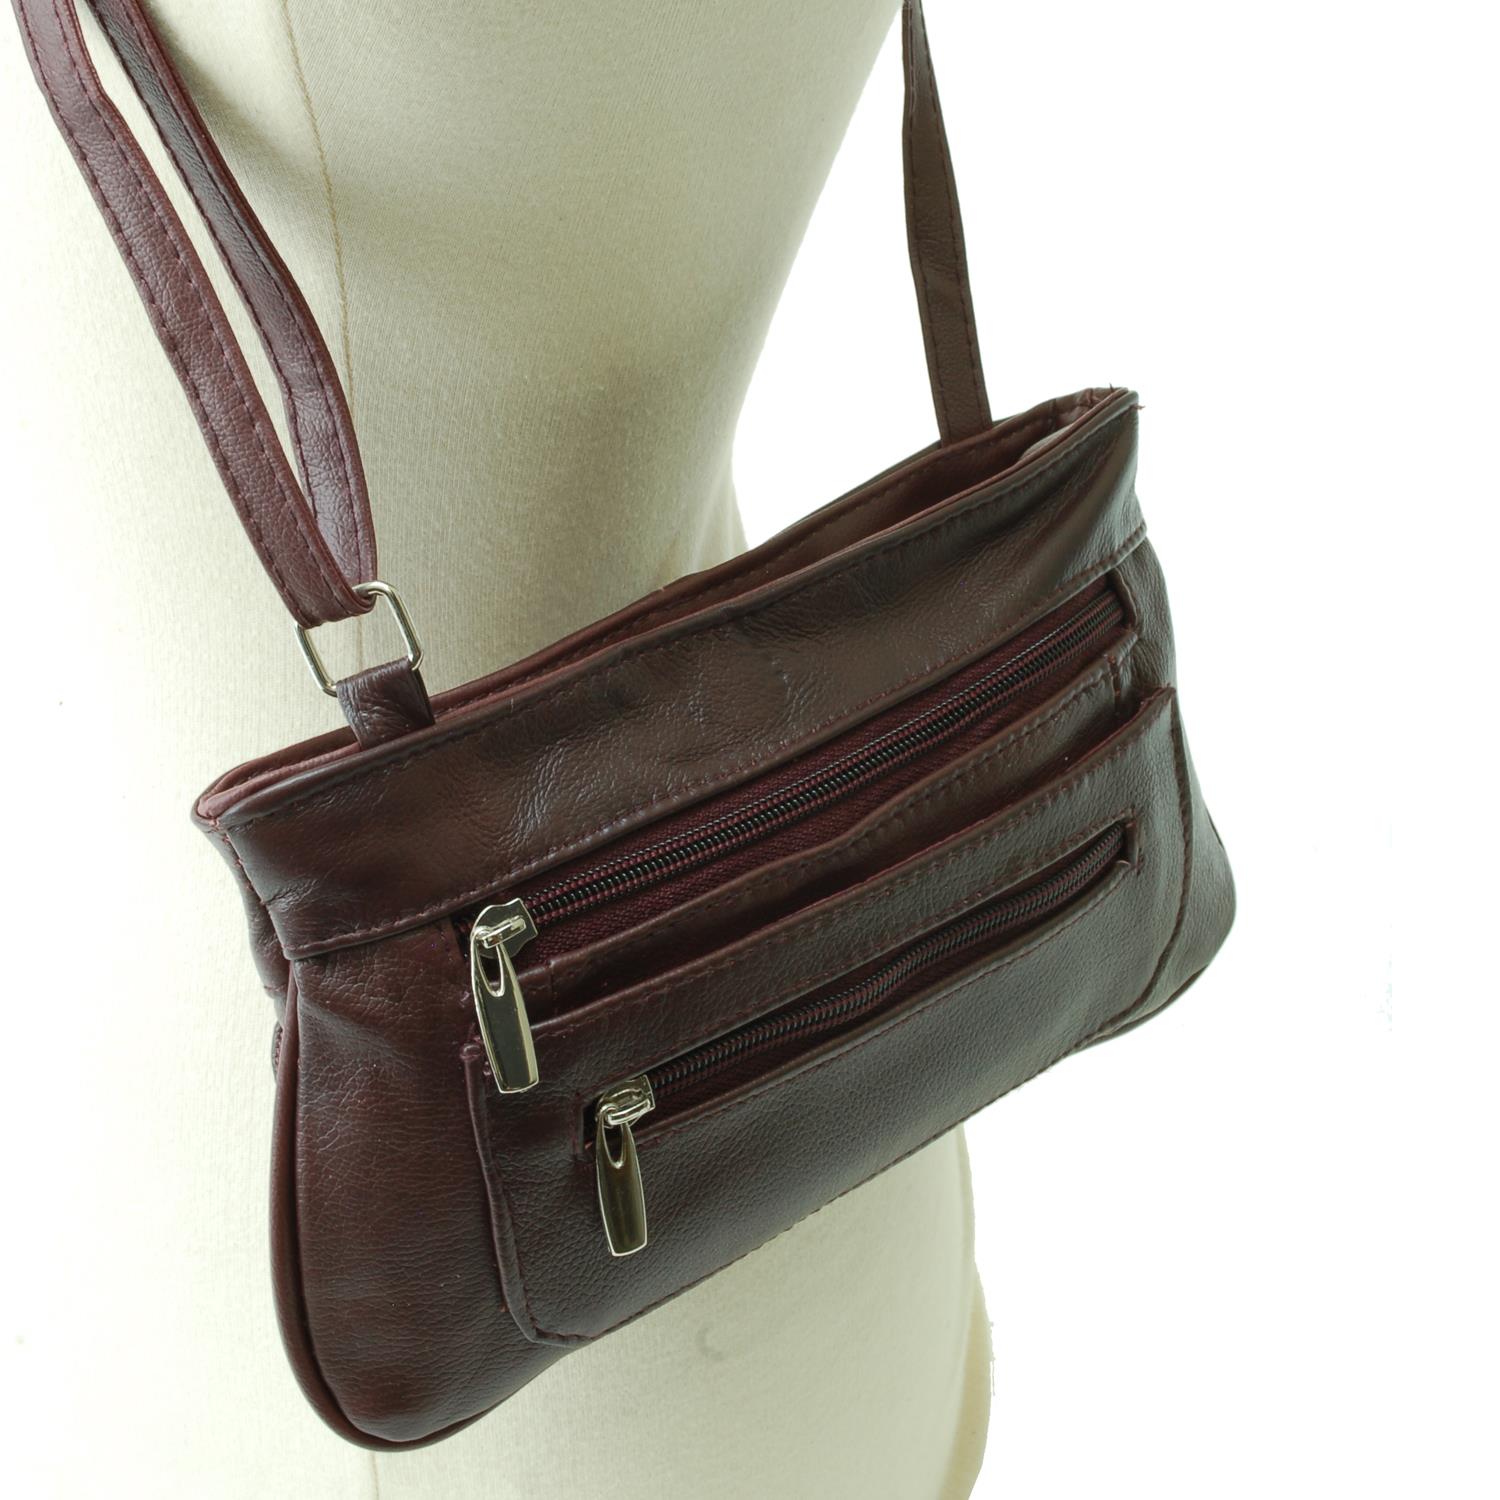 Womens Tote Bag Purse Genuine Leather 5 Pocket Organizer Clutch Purse Wallet New